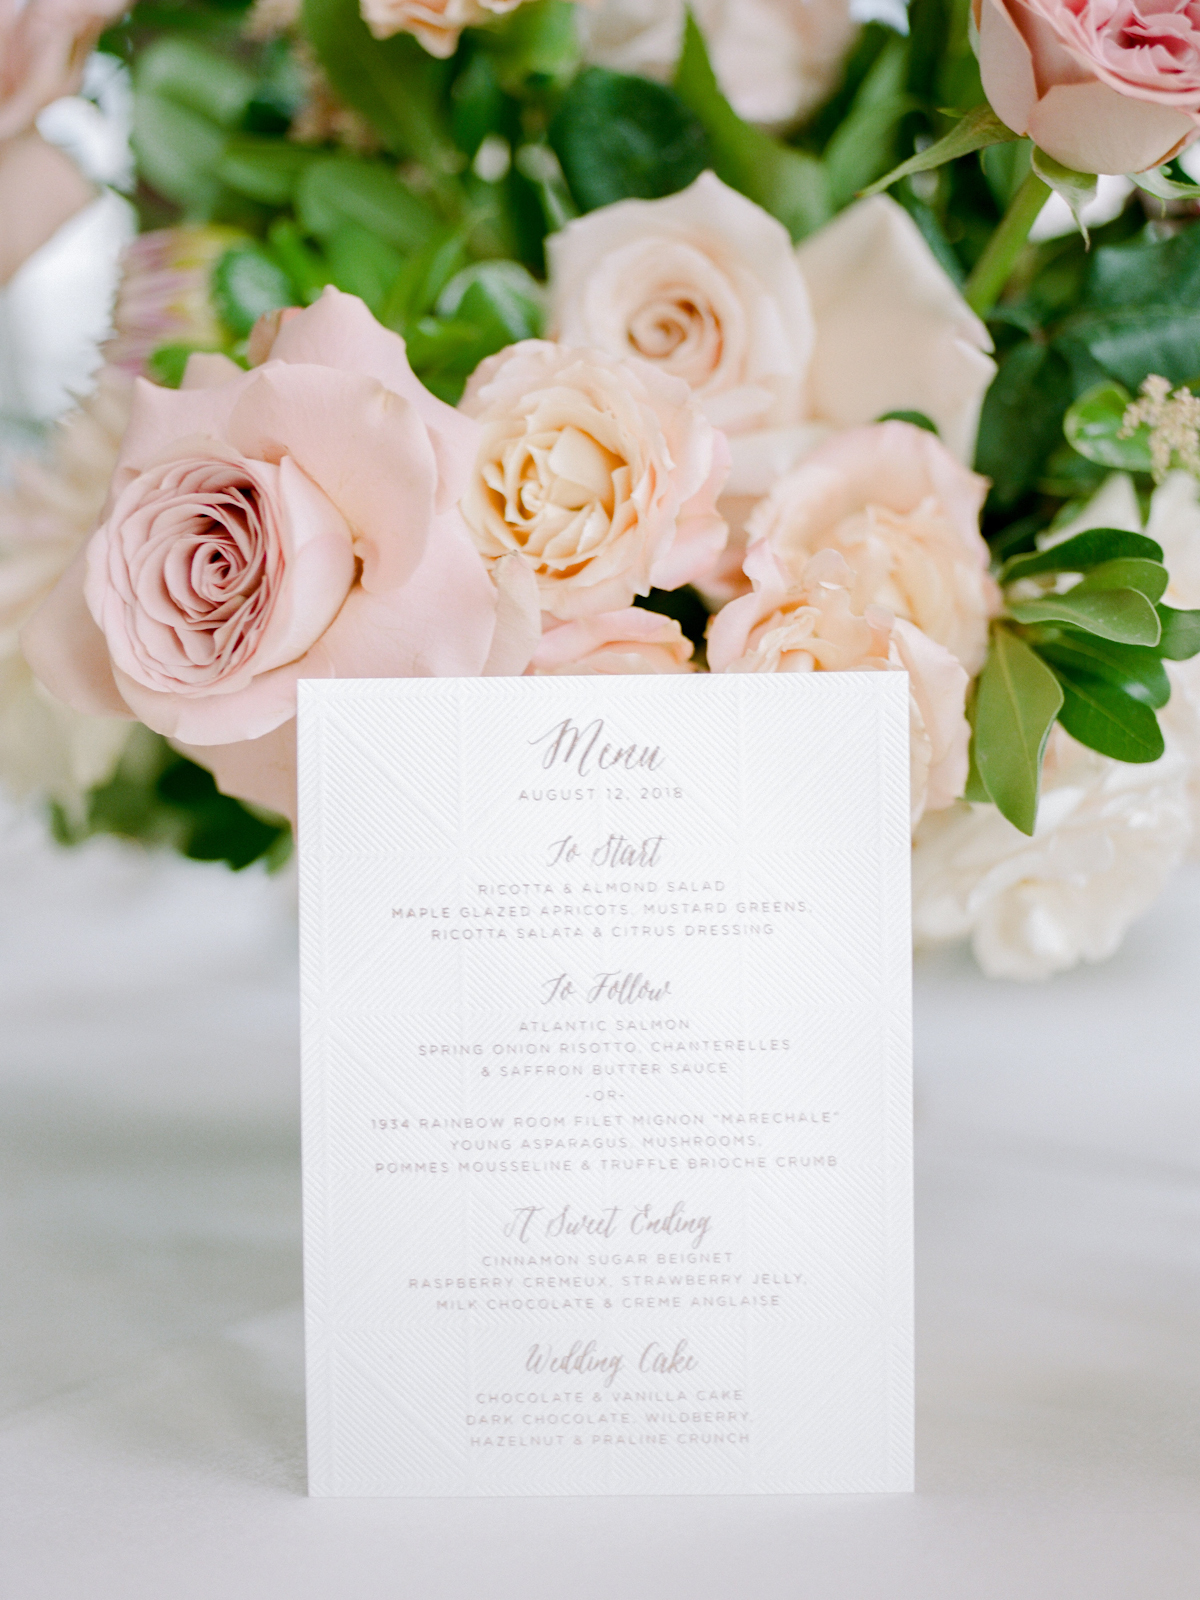 Rainbow Room wedding menu with foil stamped details